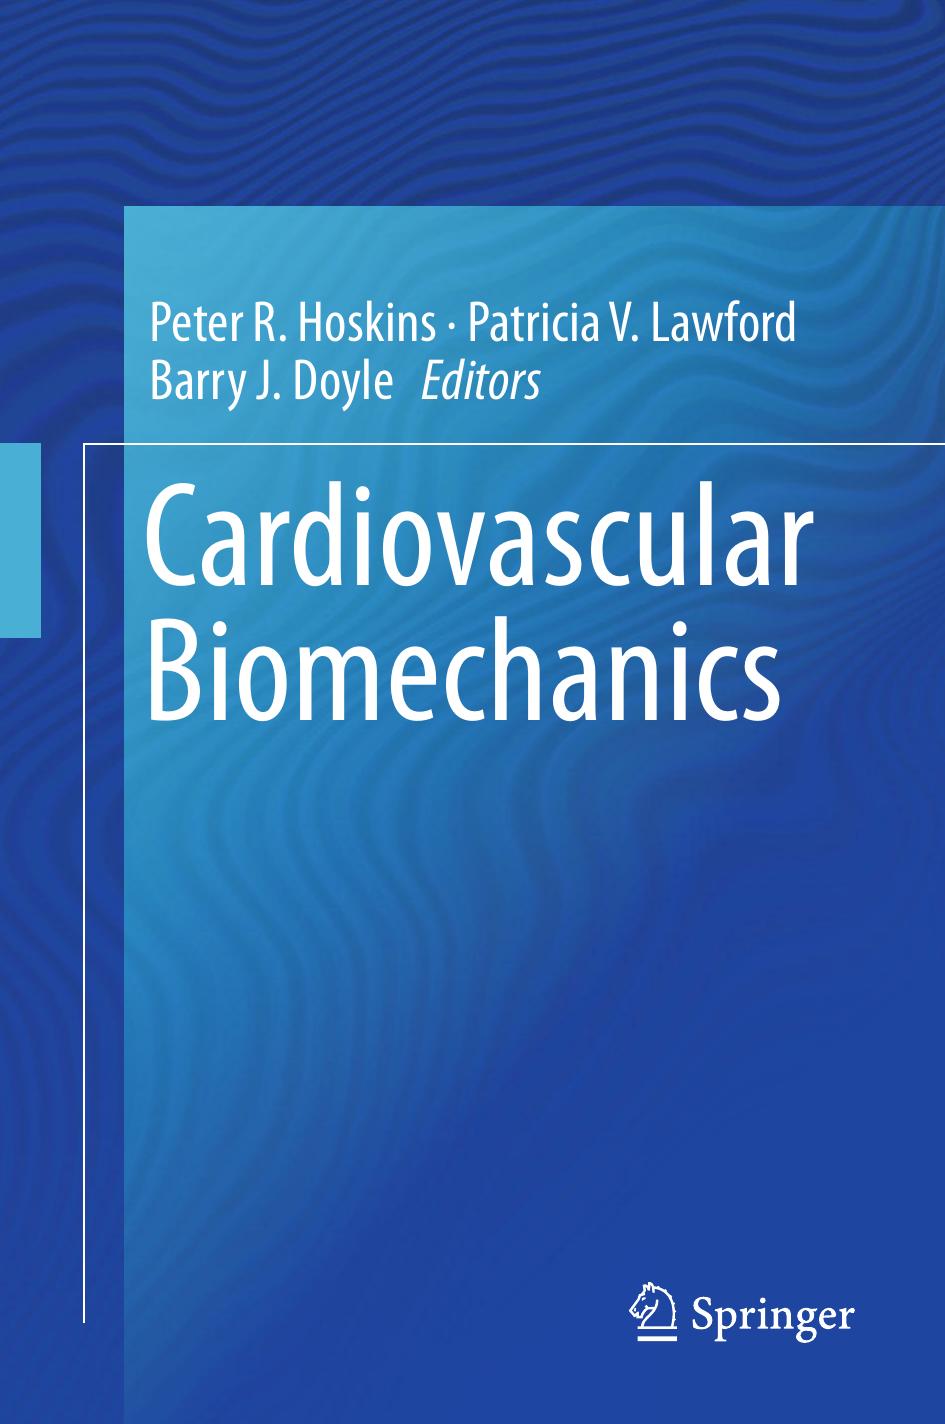 Cardiovascular Biomechanics 2017